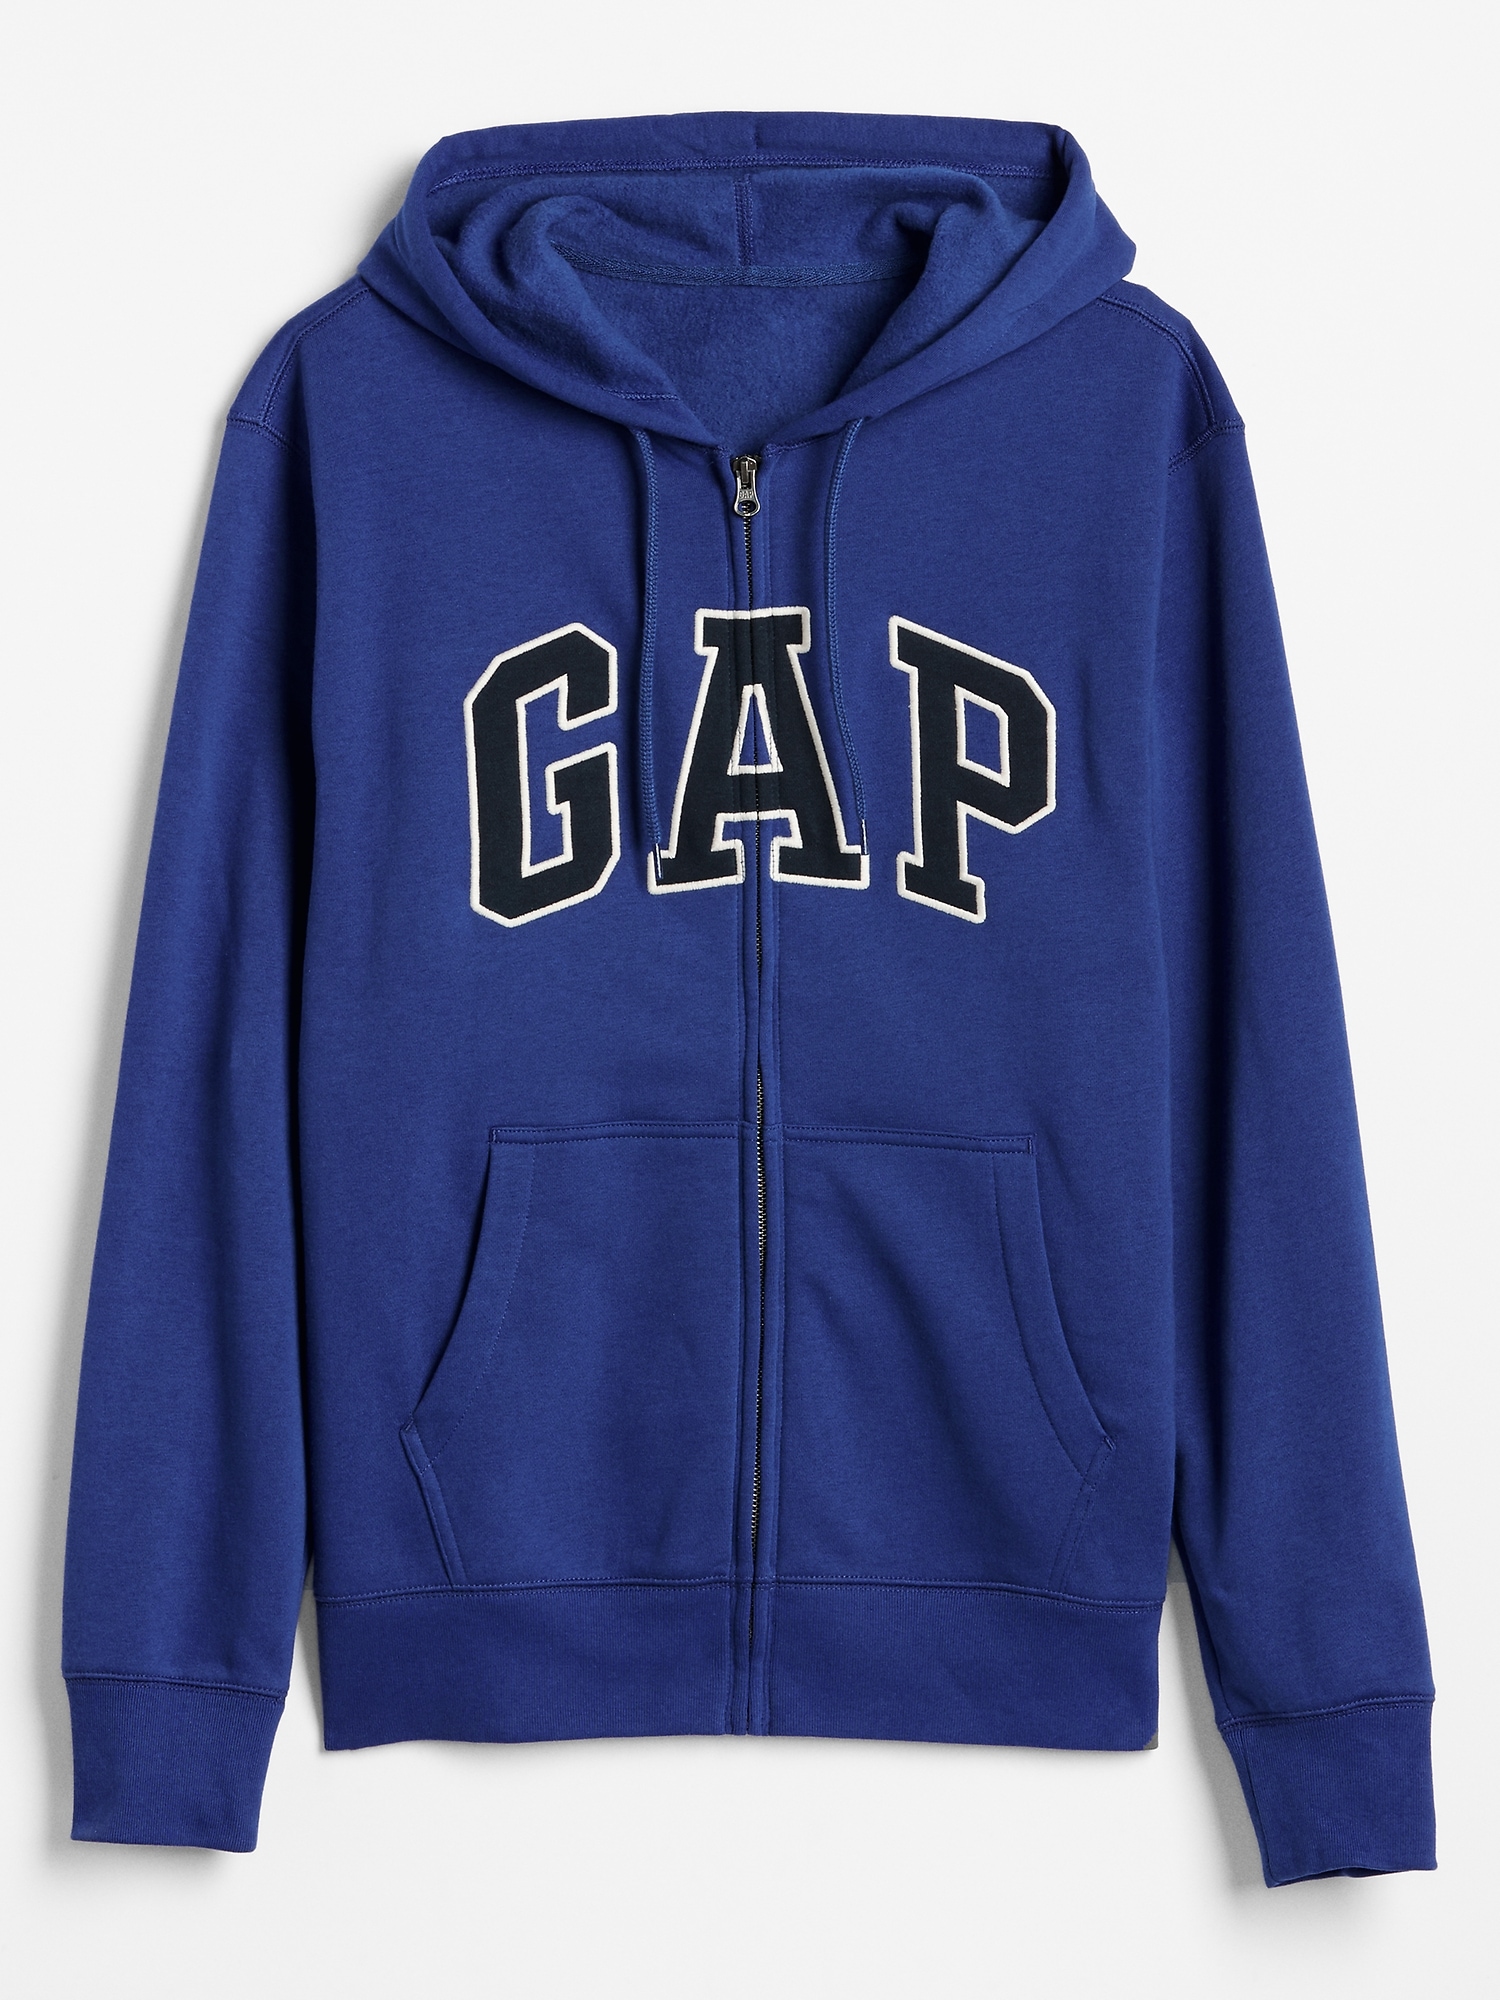 gap zipper jacket